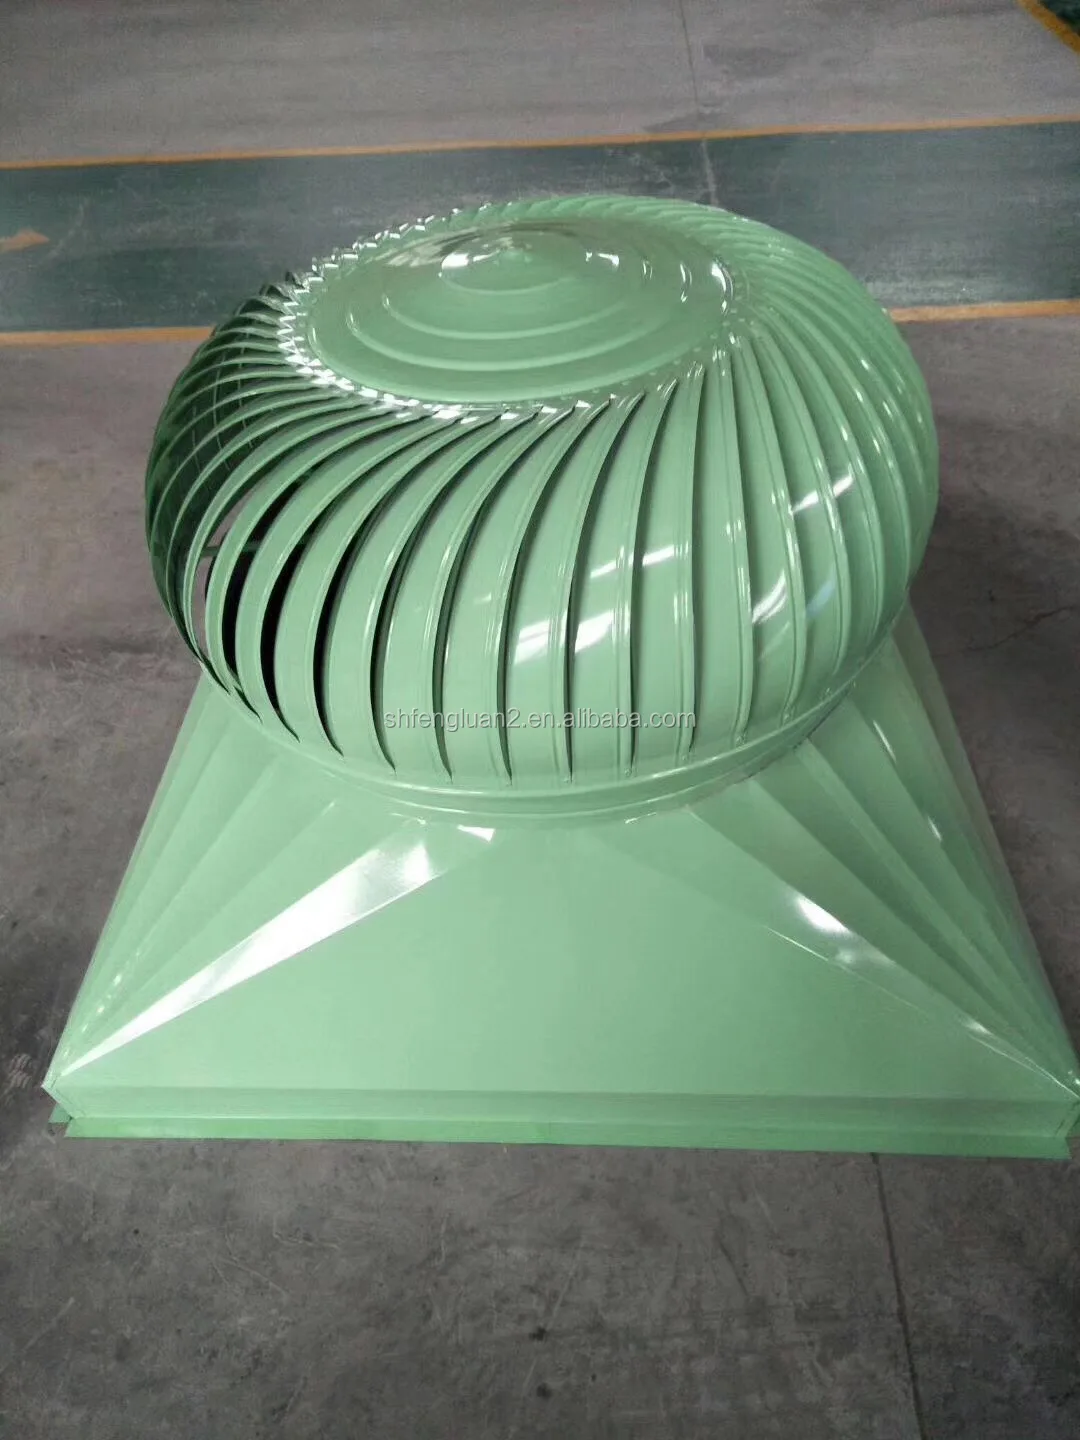 Wind Powered Spiral Turbine Roof Turbo Ventilator Buy Roof Turbine Ventilator,Spiral Turbine